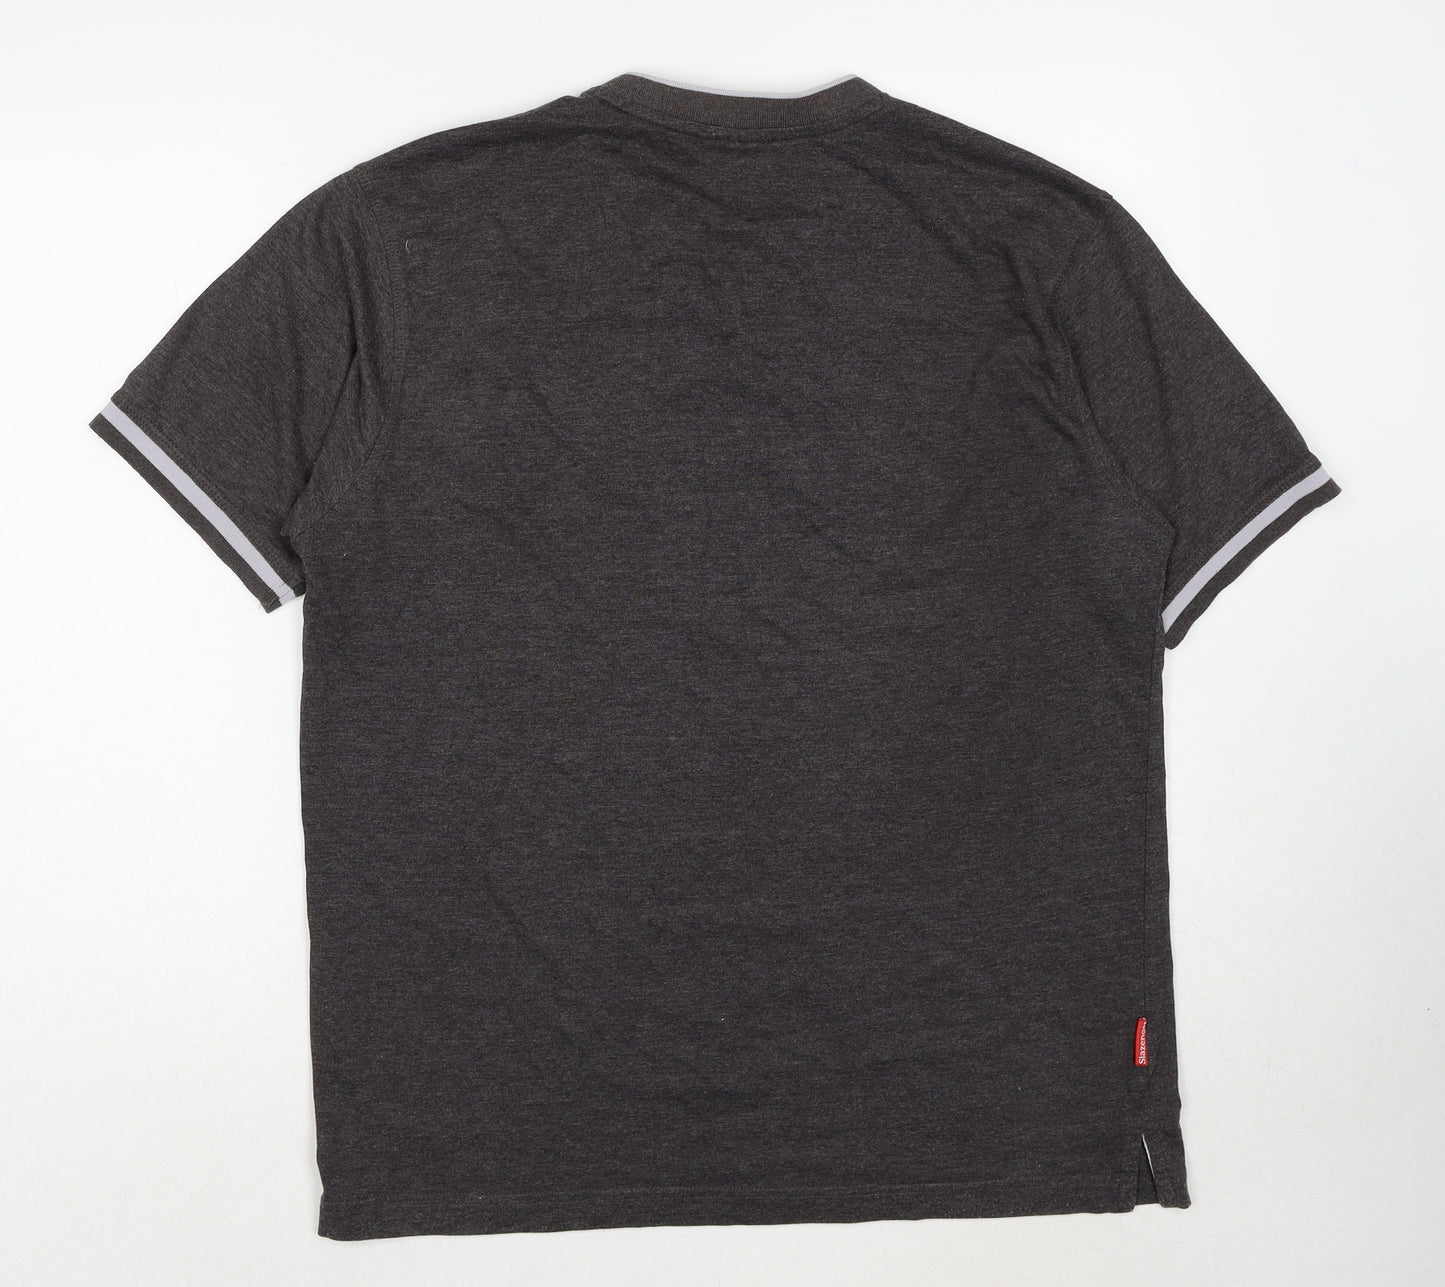 Slazenger Mens Brown Cotton T-Shirt Size L V-Neck